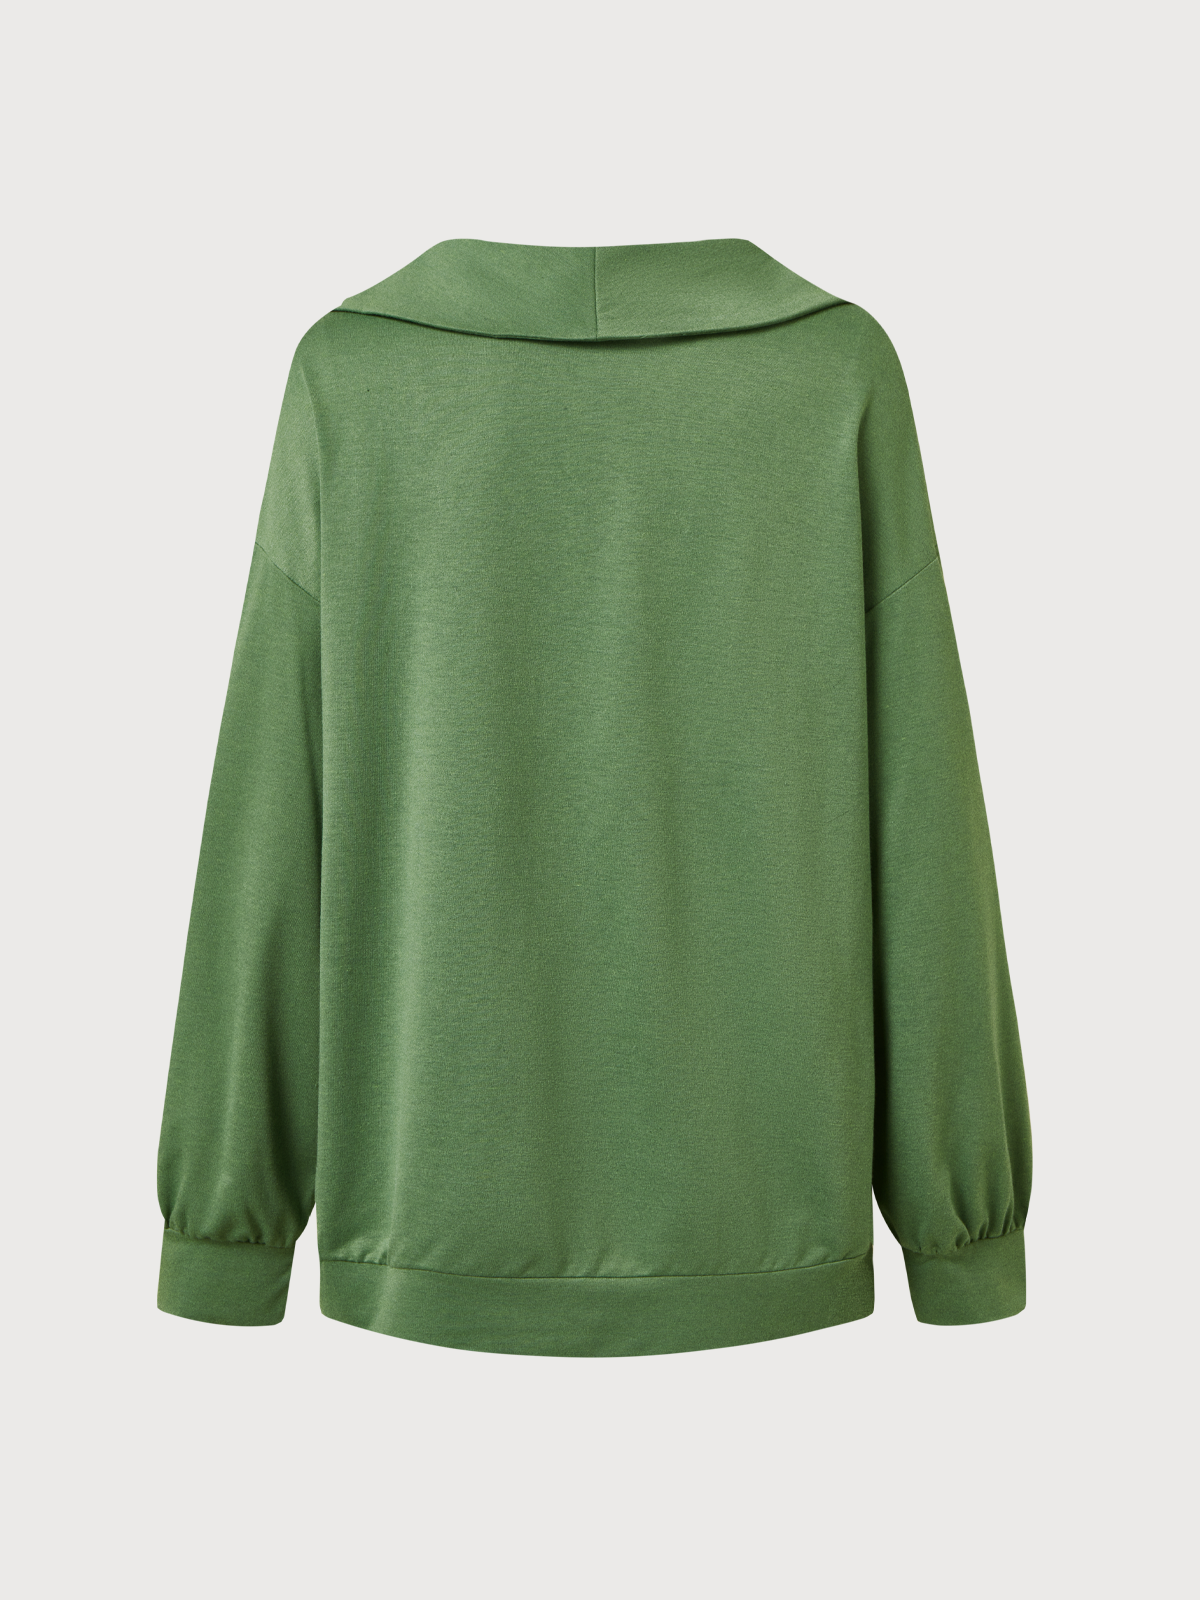 Women Casual Plain Zipper Turtleneck Sweatshirt